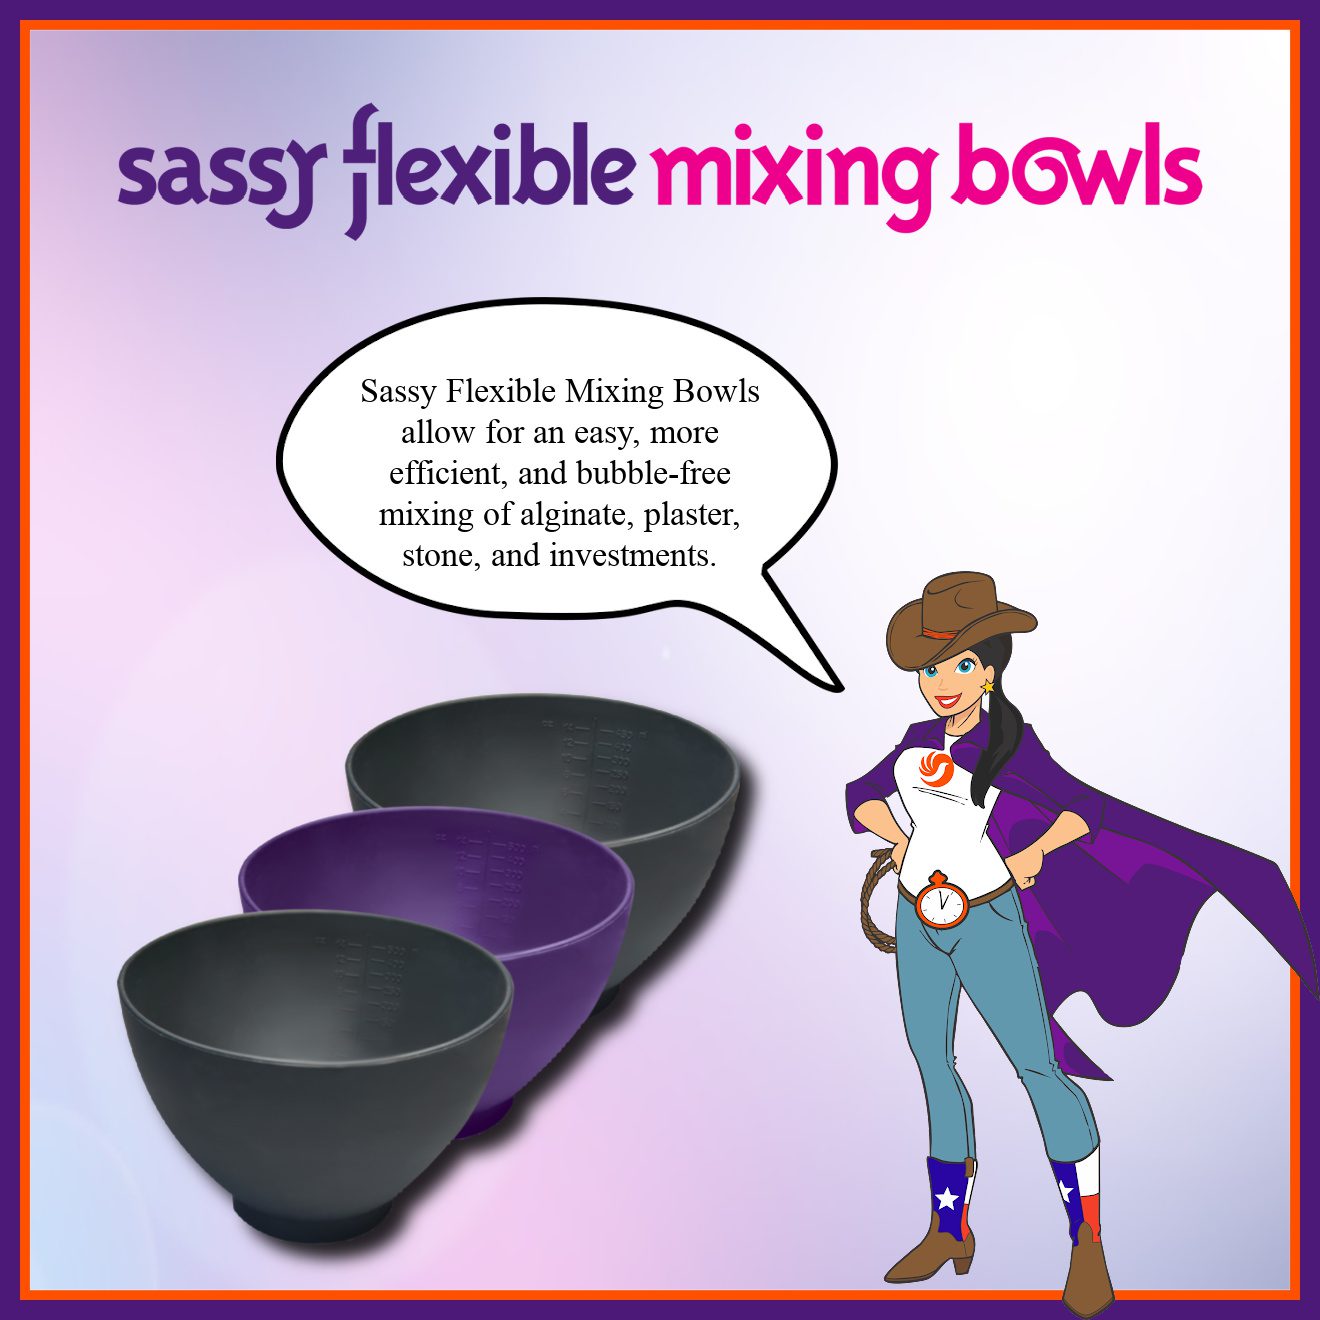 https://dentalcreationsltd.com/wp-content/uploads/2021/08/Sassy-Flexible-Mixing-Bowls.jpg